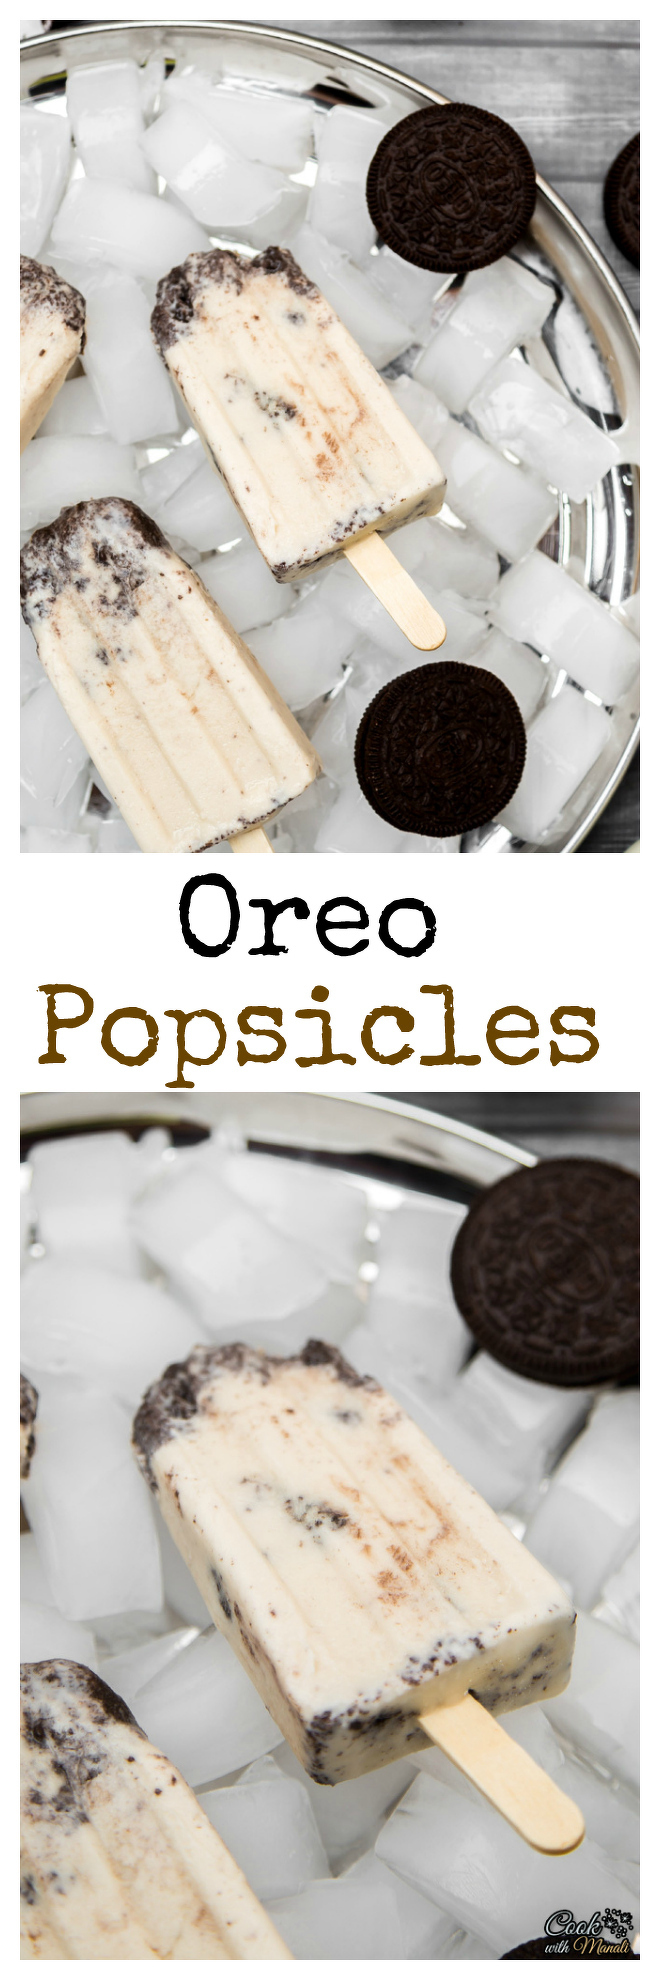 Oreo Popsicles Collage-nocwm